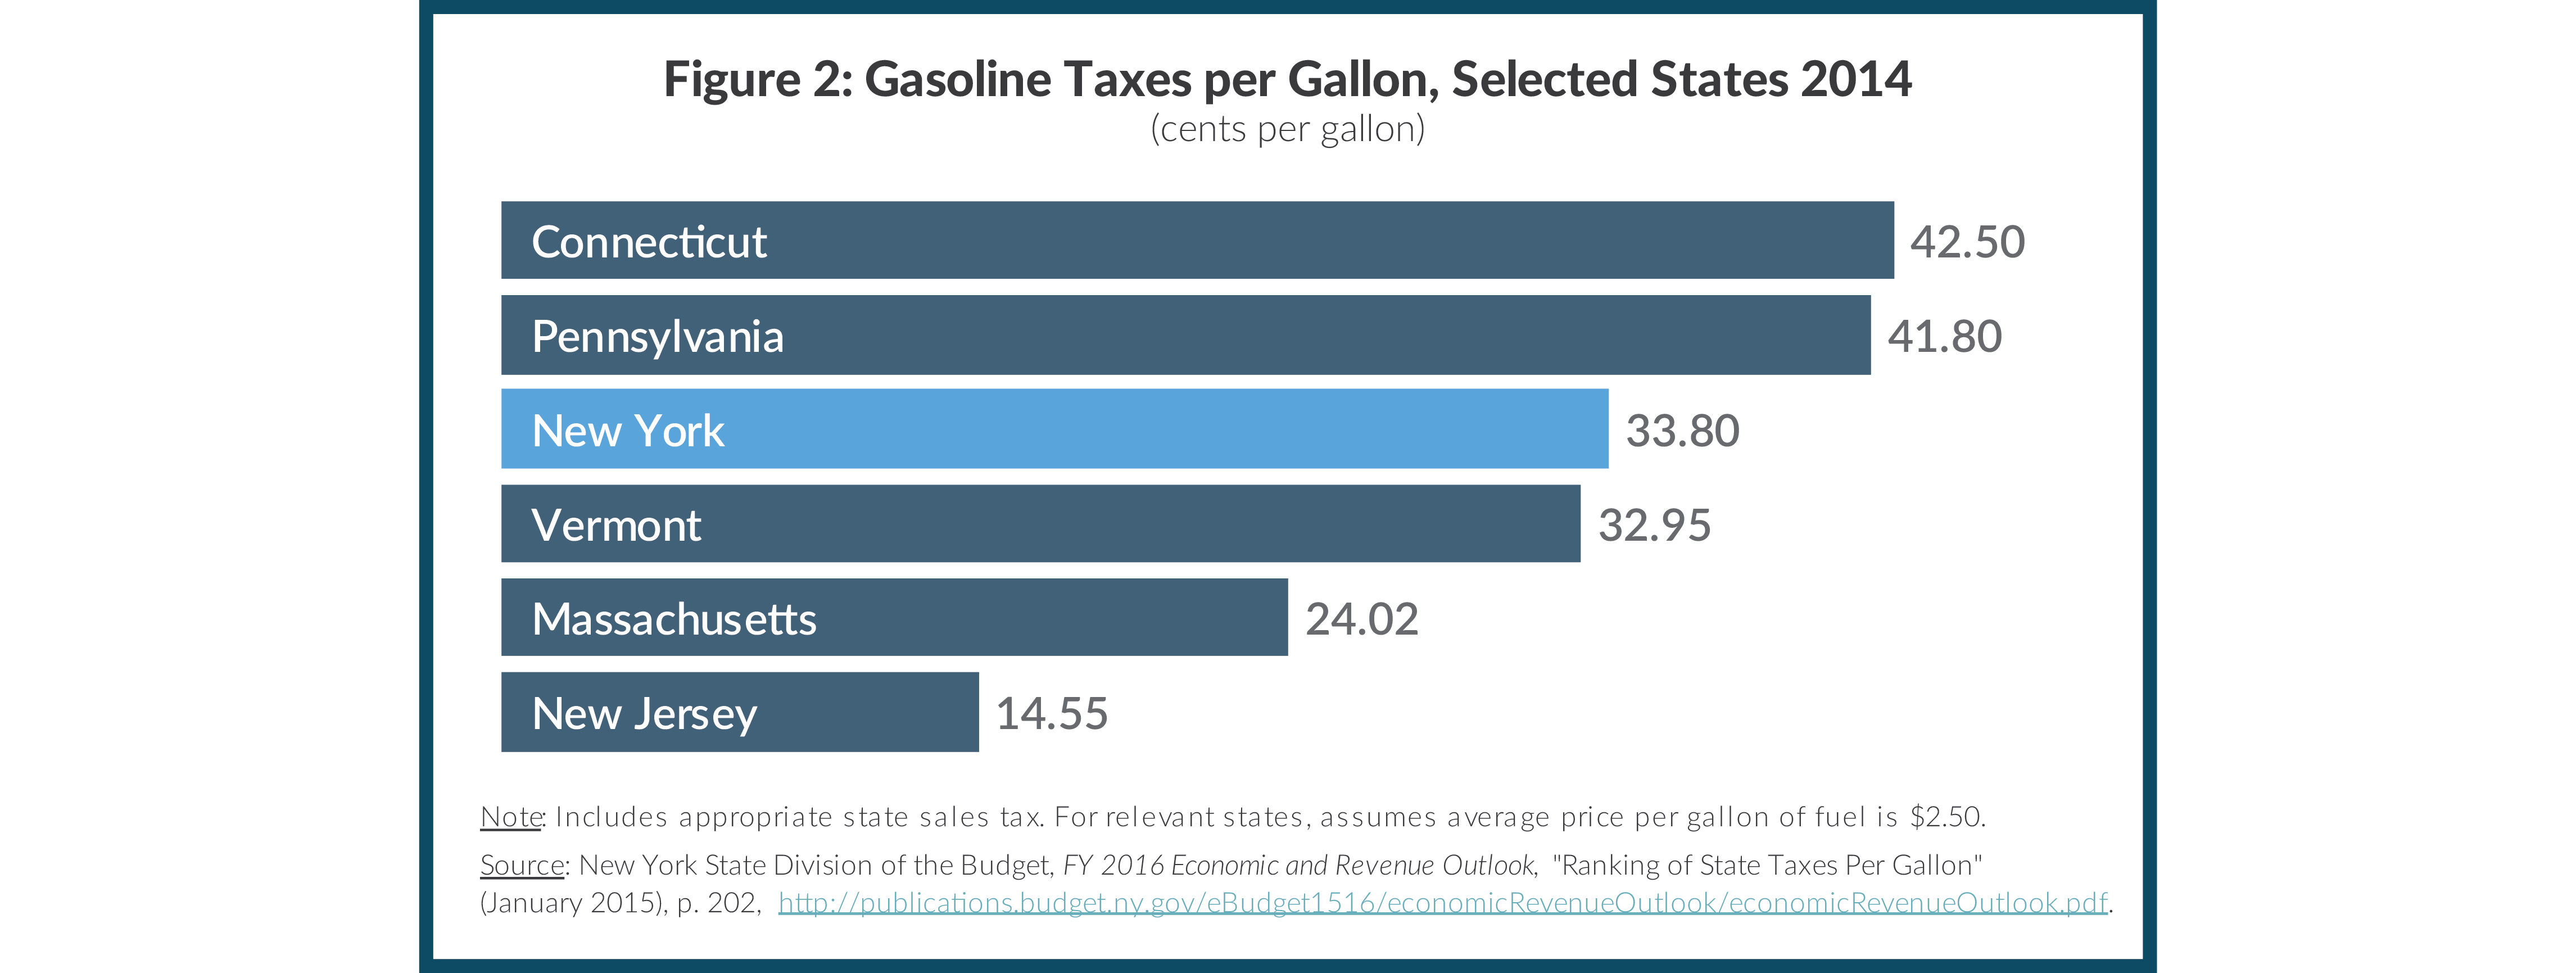 Figure 2: Gasoline Taxes per Gallon, Selected States 2014